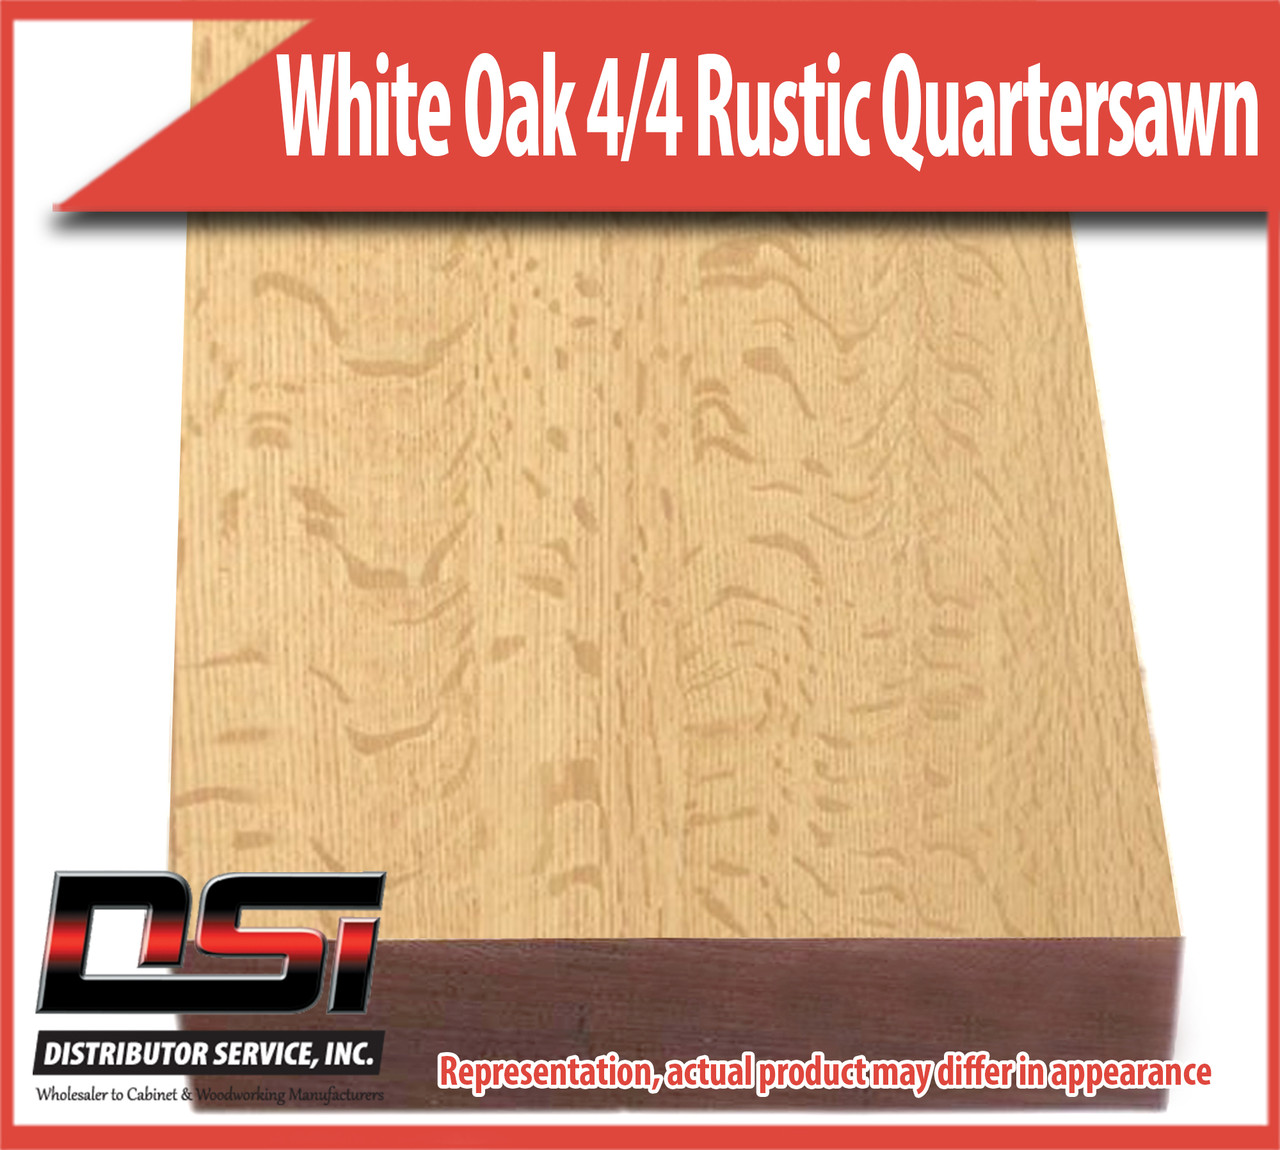 Domestic Hardwood Lumber White Oak 4/4 Rustic Quartersawn 15/16" 6-8'